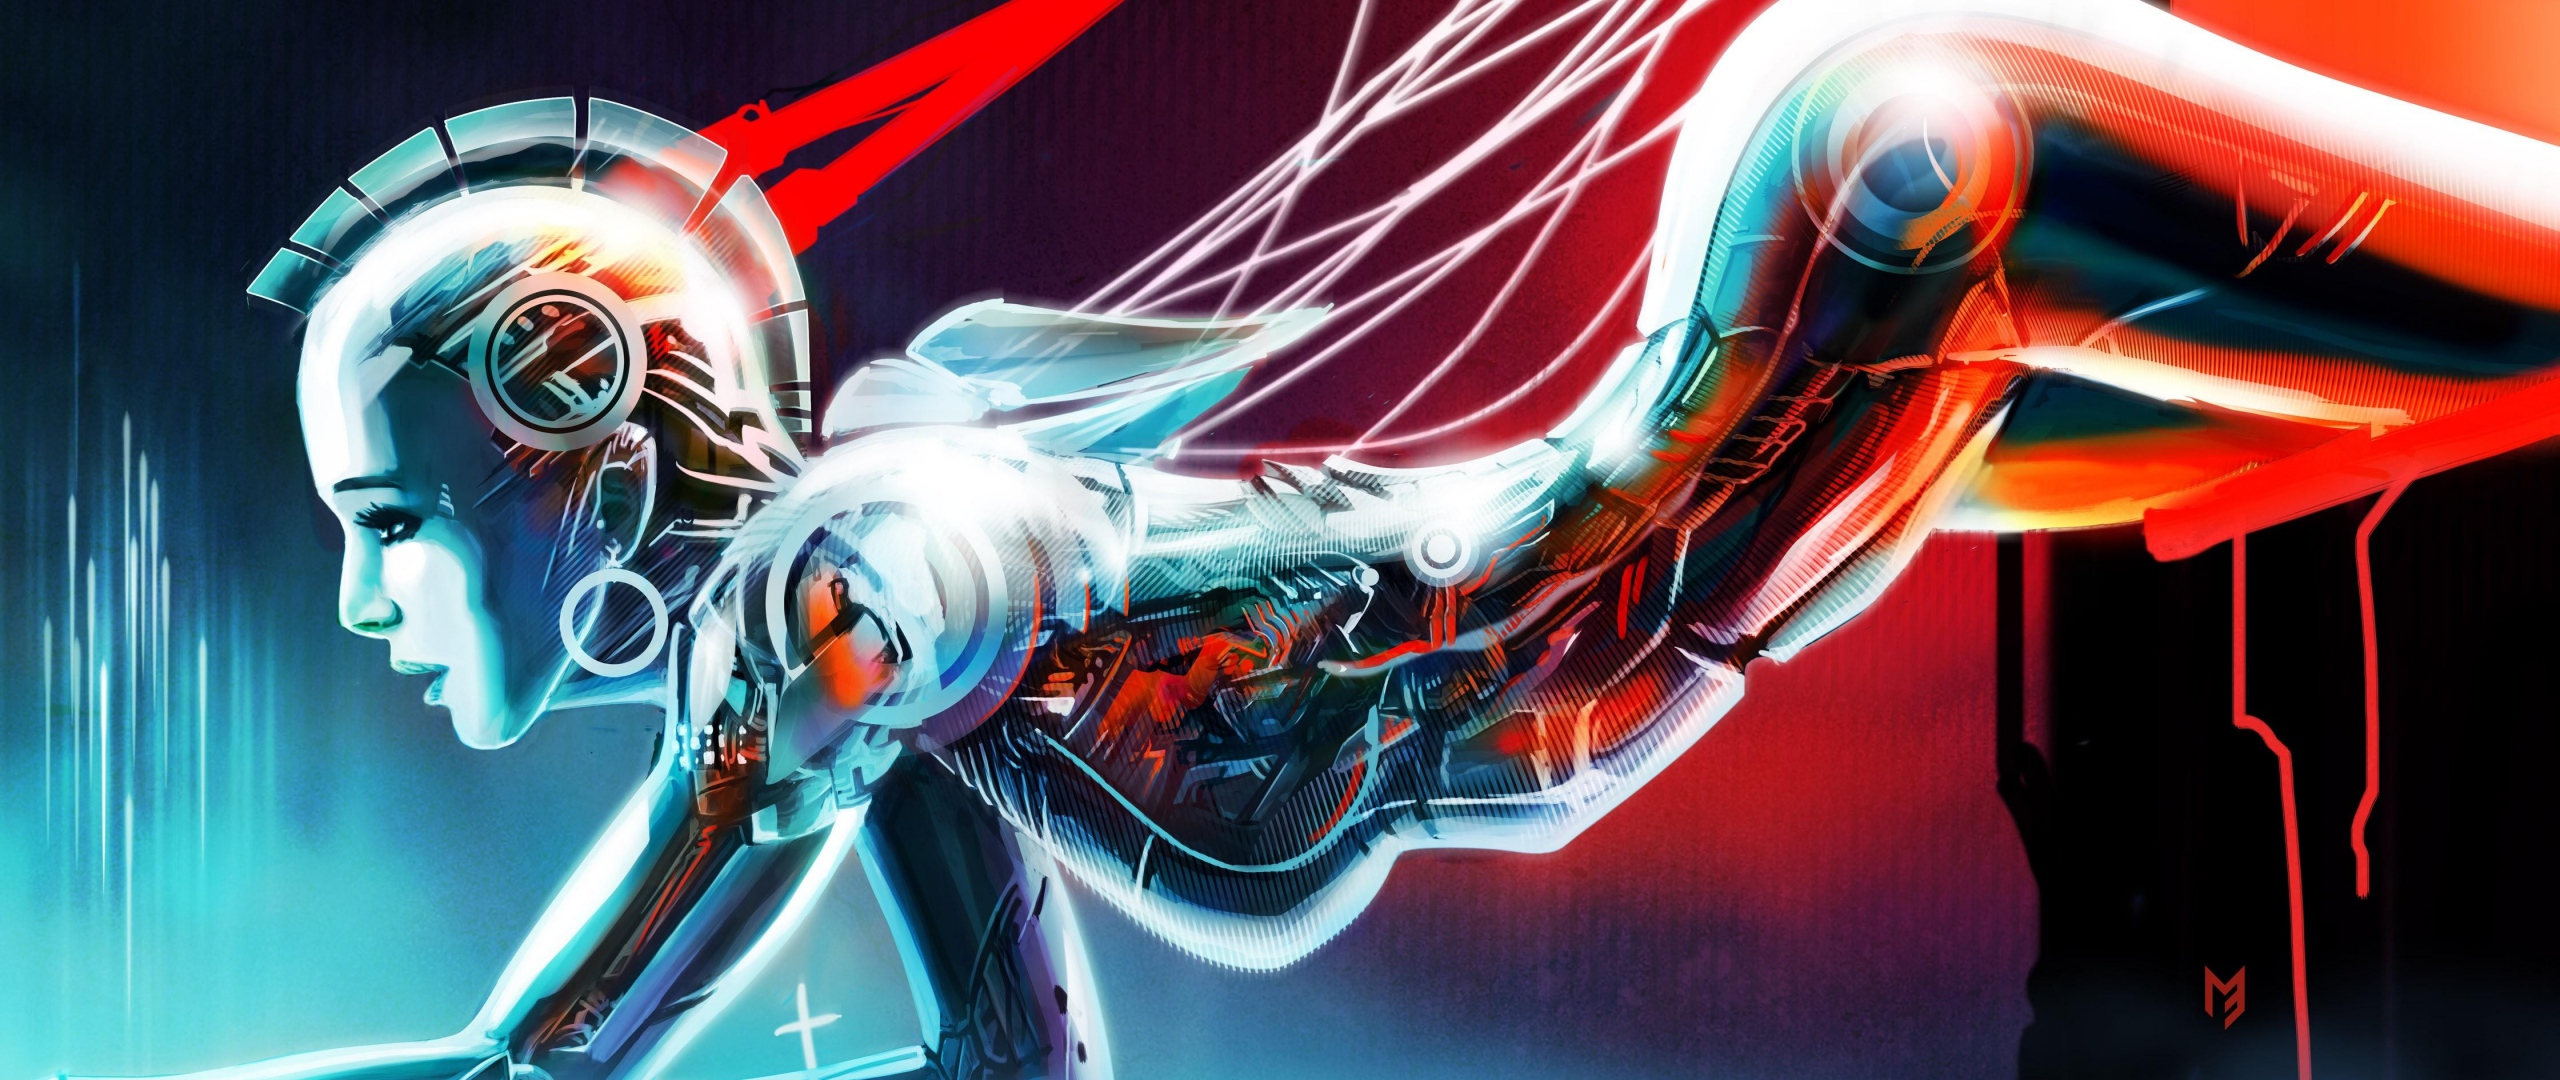 Girl Robot Cyborg Lie Wallpaper Background